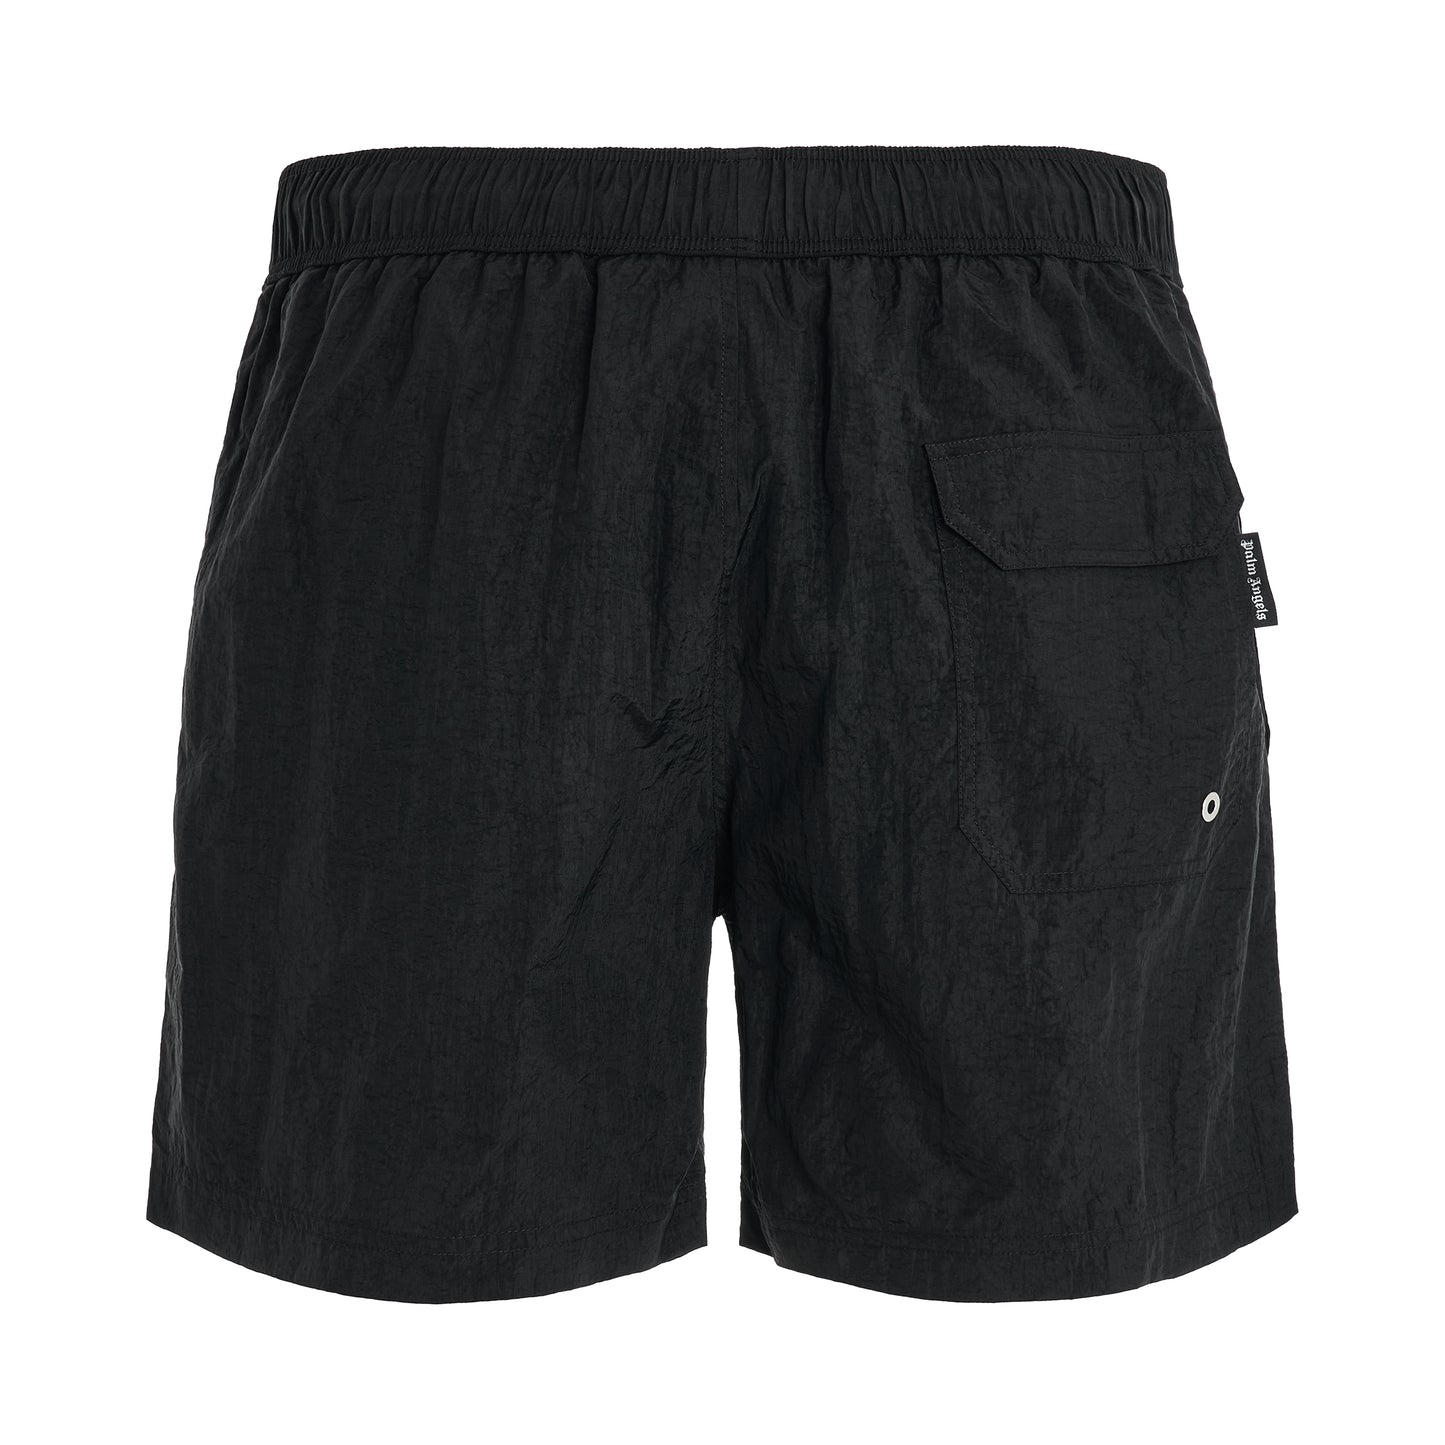 Monogram Swim shorts in Black/White